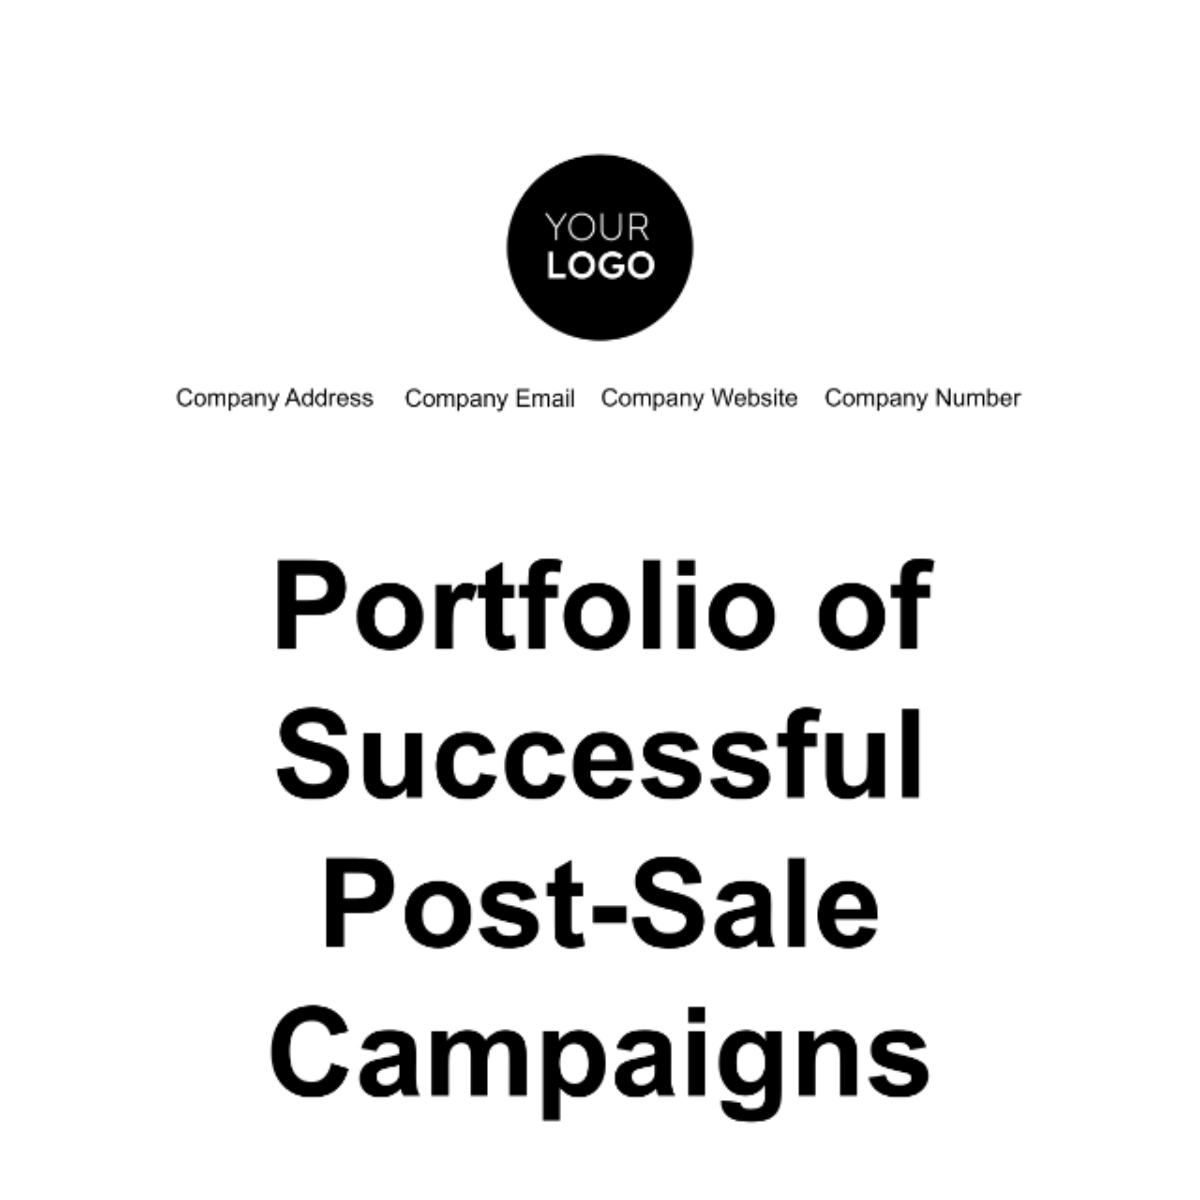 Portfolio of Successful Post-Sale Campaigns Template